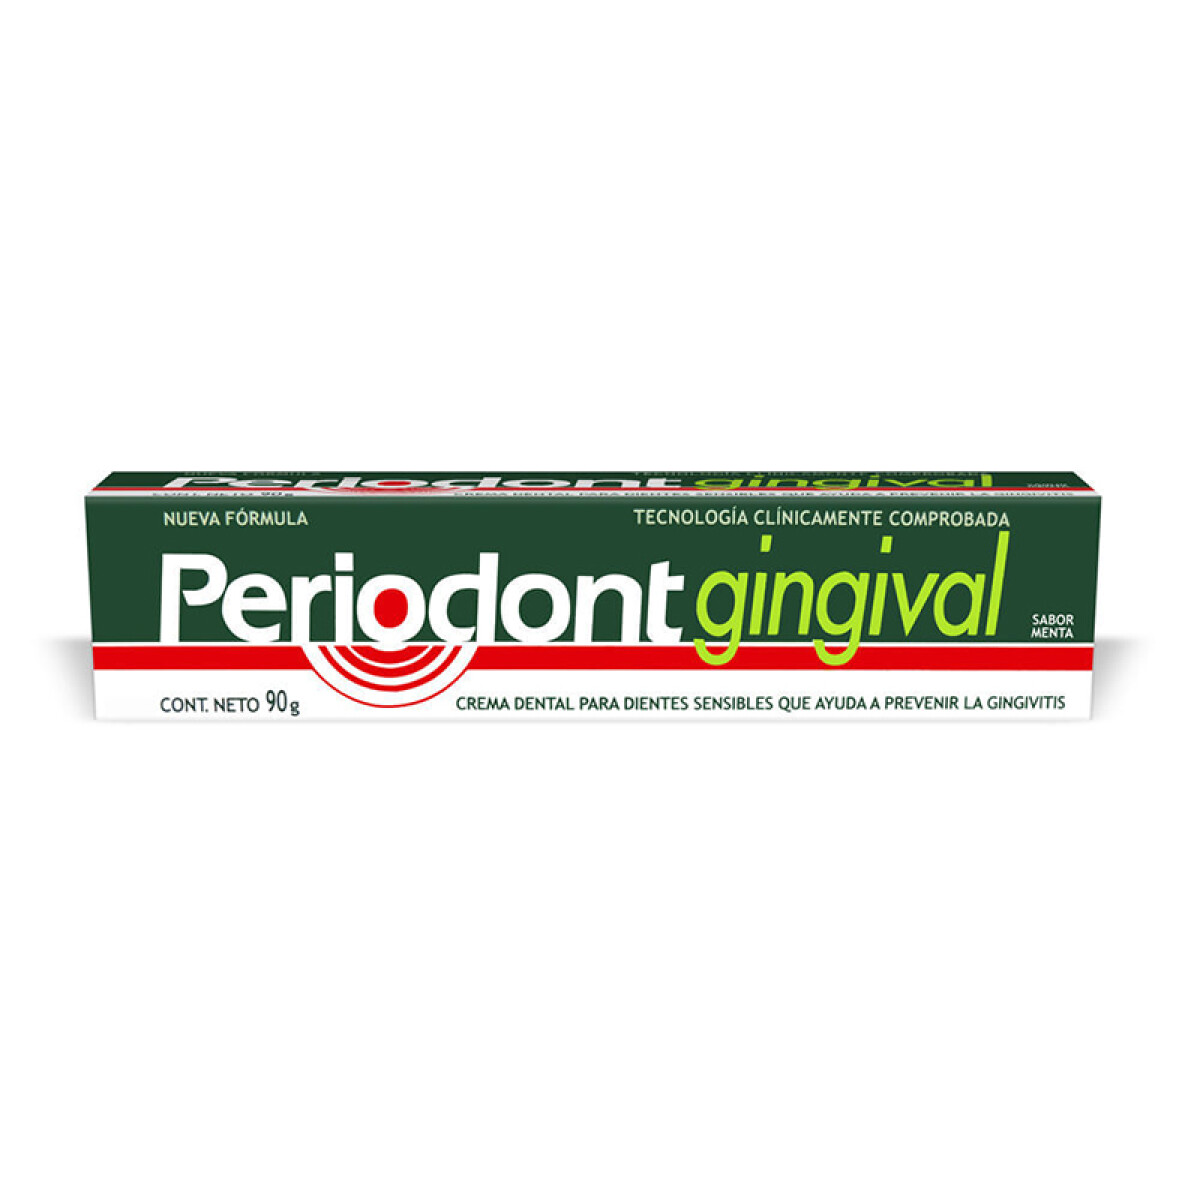 Periodont crema dental 90 g - Gingival 